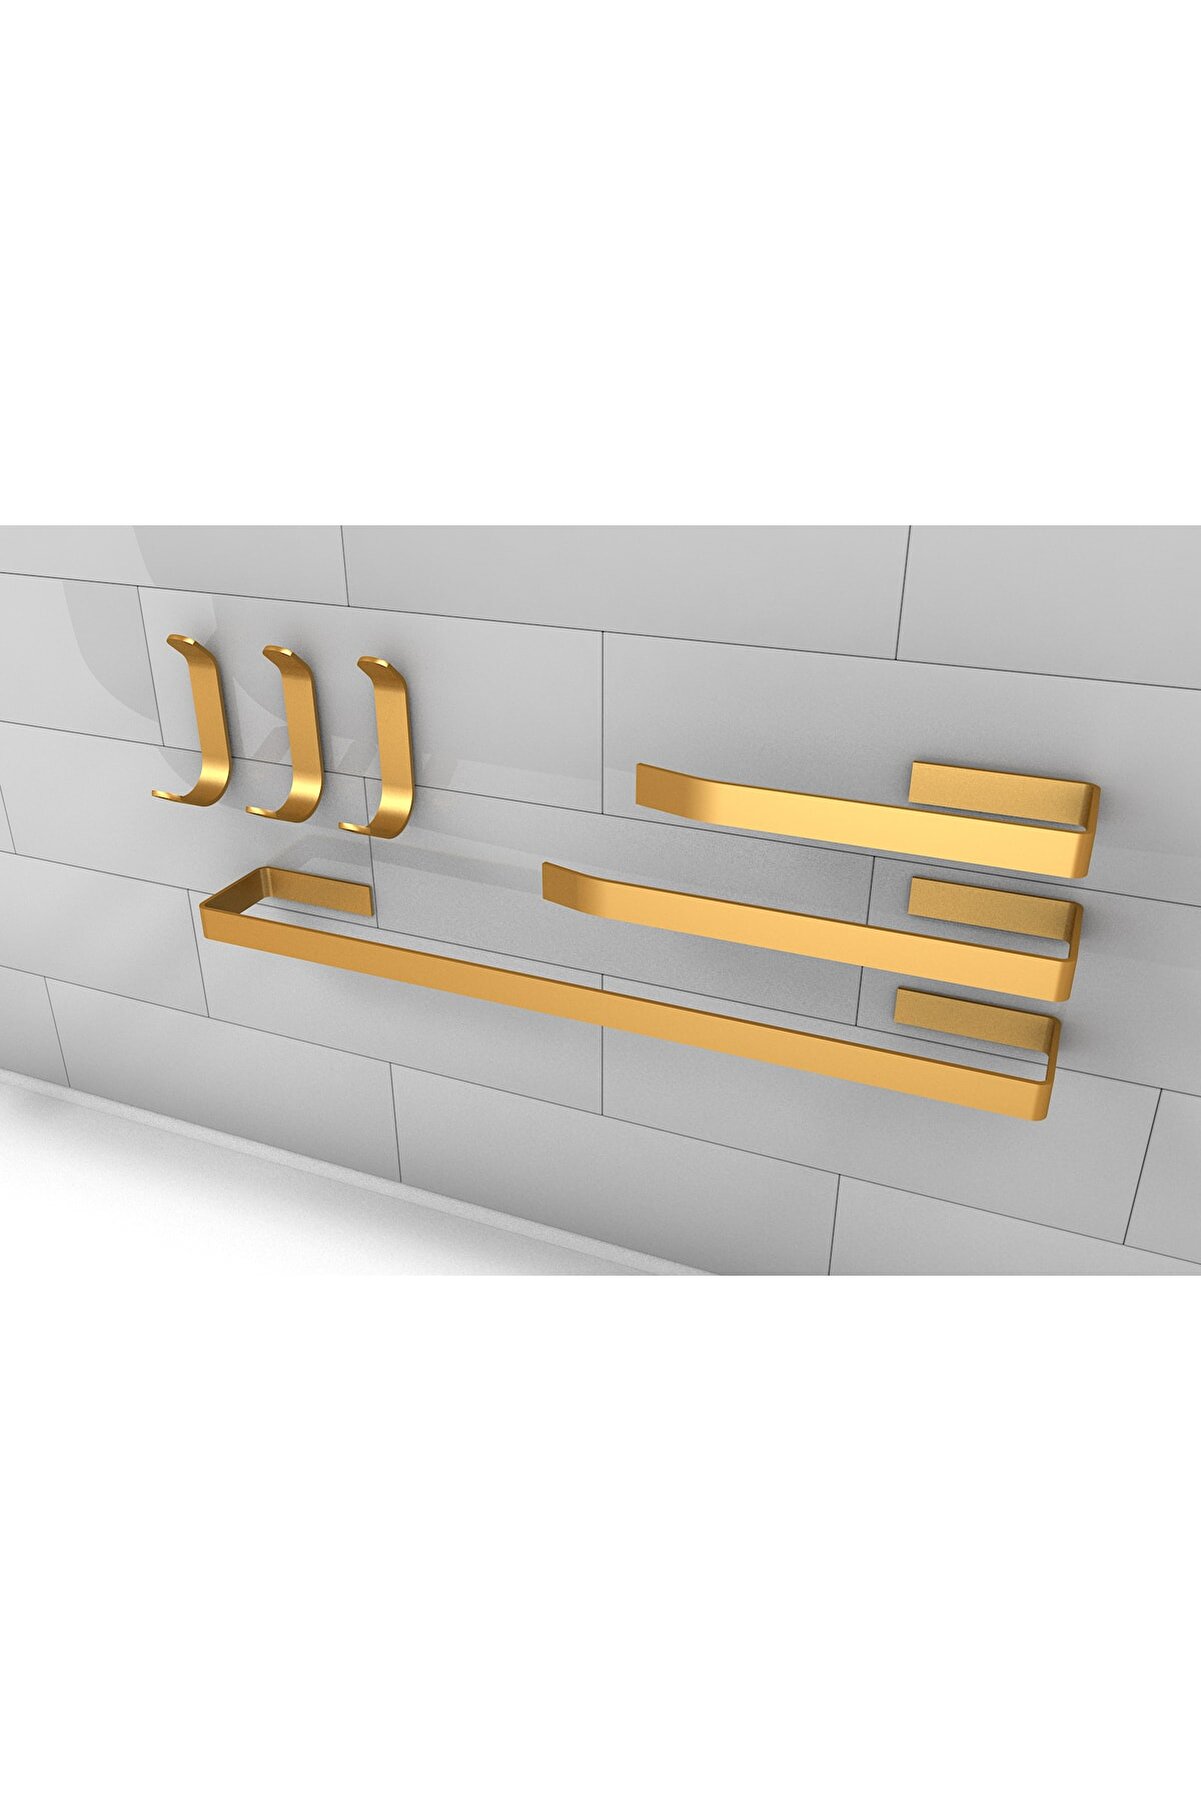 Rudi 6 Pcs Gold Stainless Bathroom Set, Towel Holder, Adhesive Design P623S5416